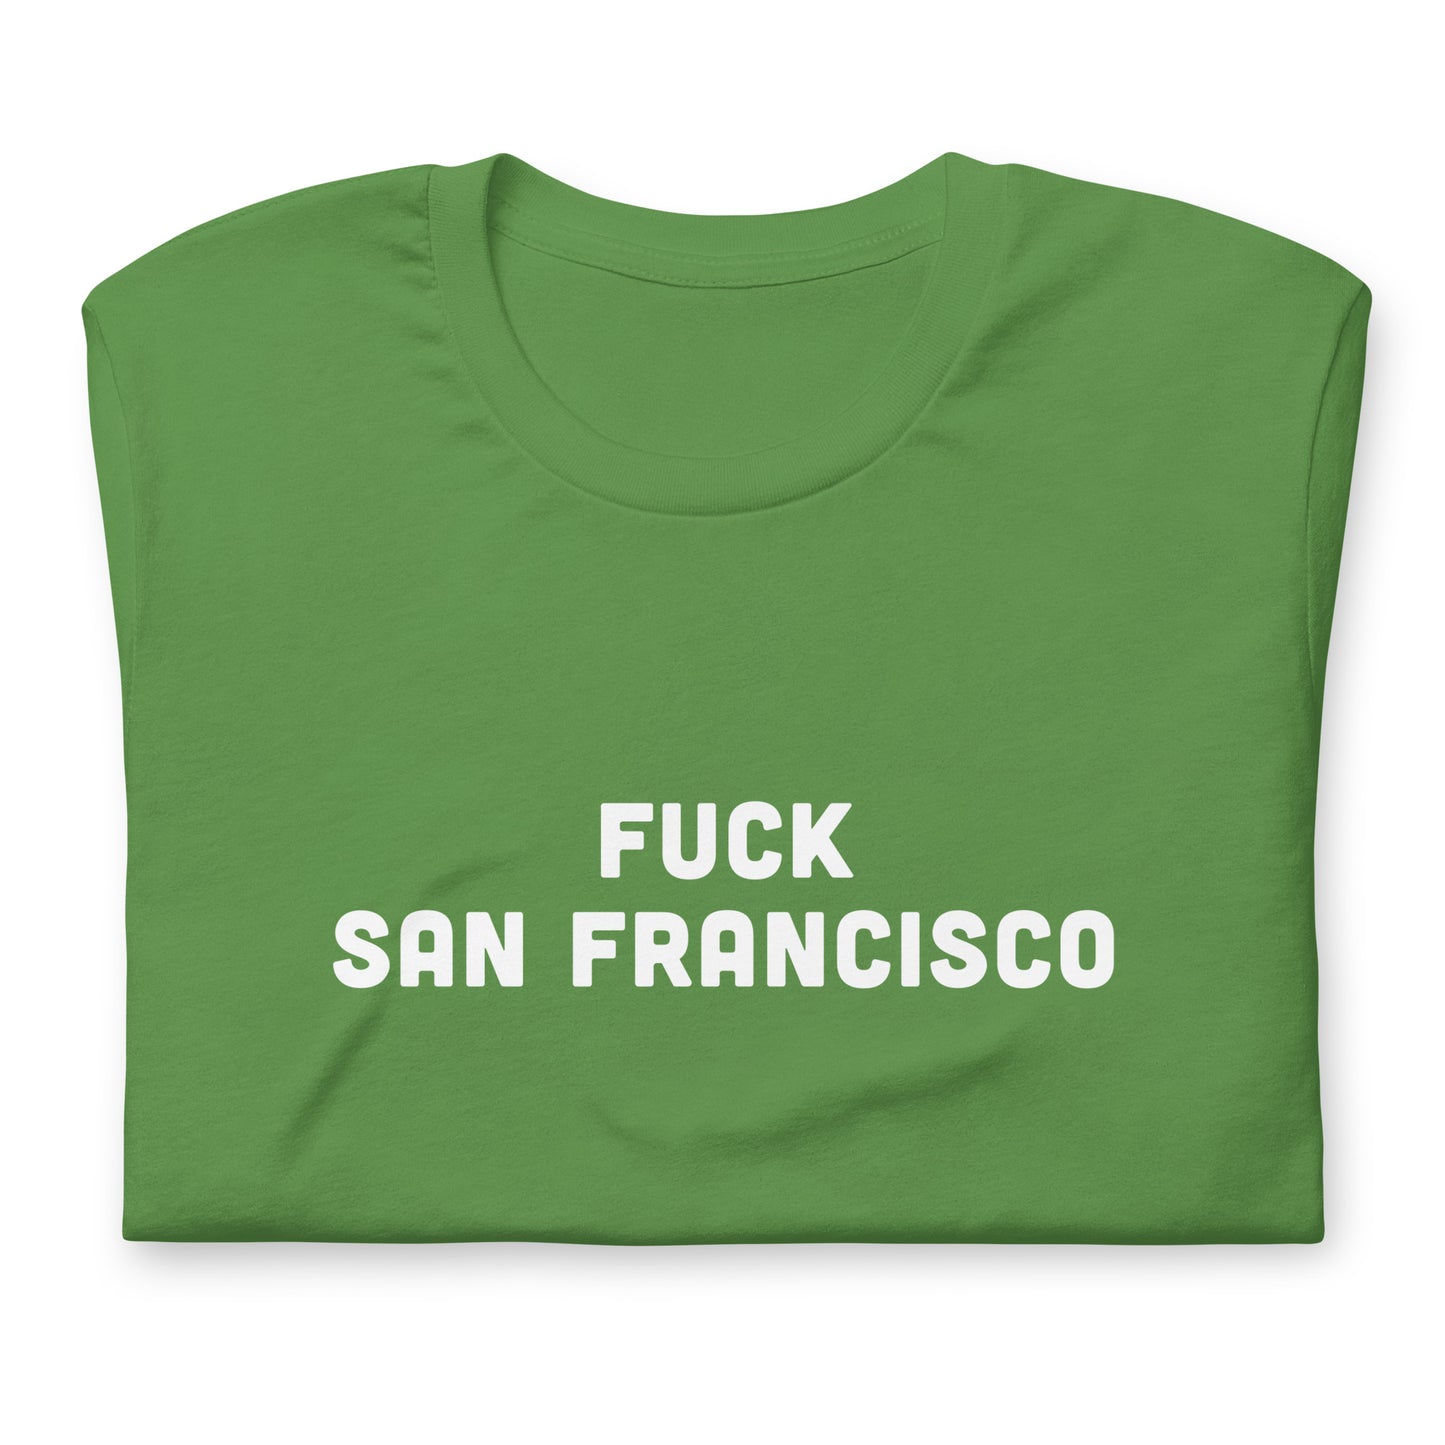 Fuck San Francisco T-Shirt Size S Color Forest